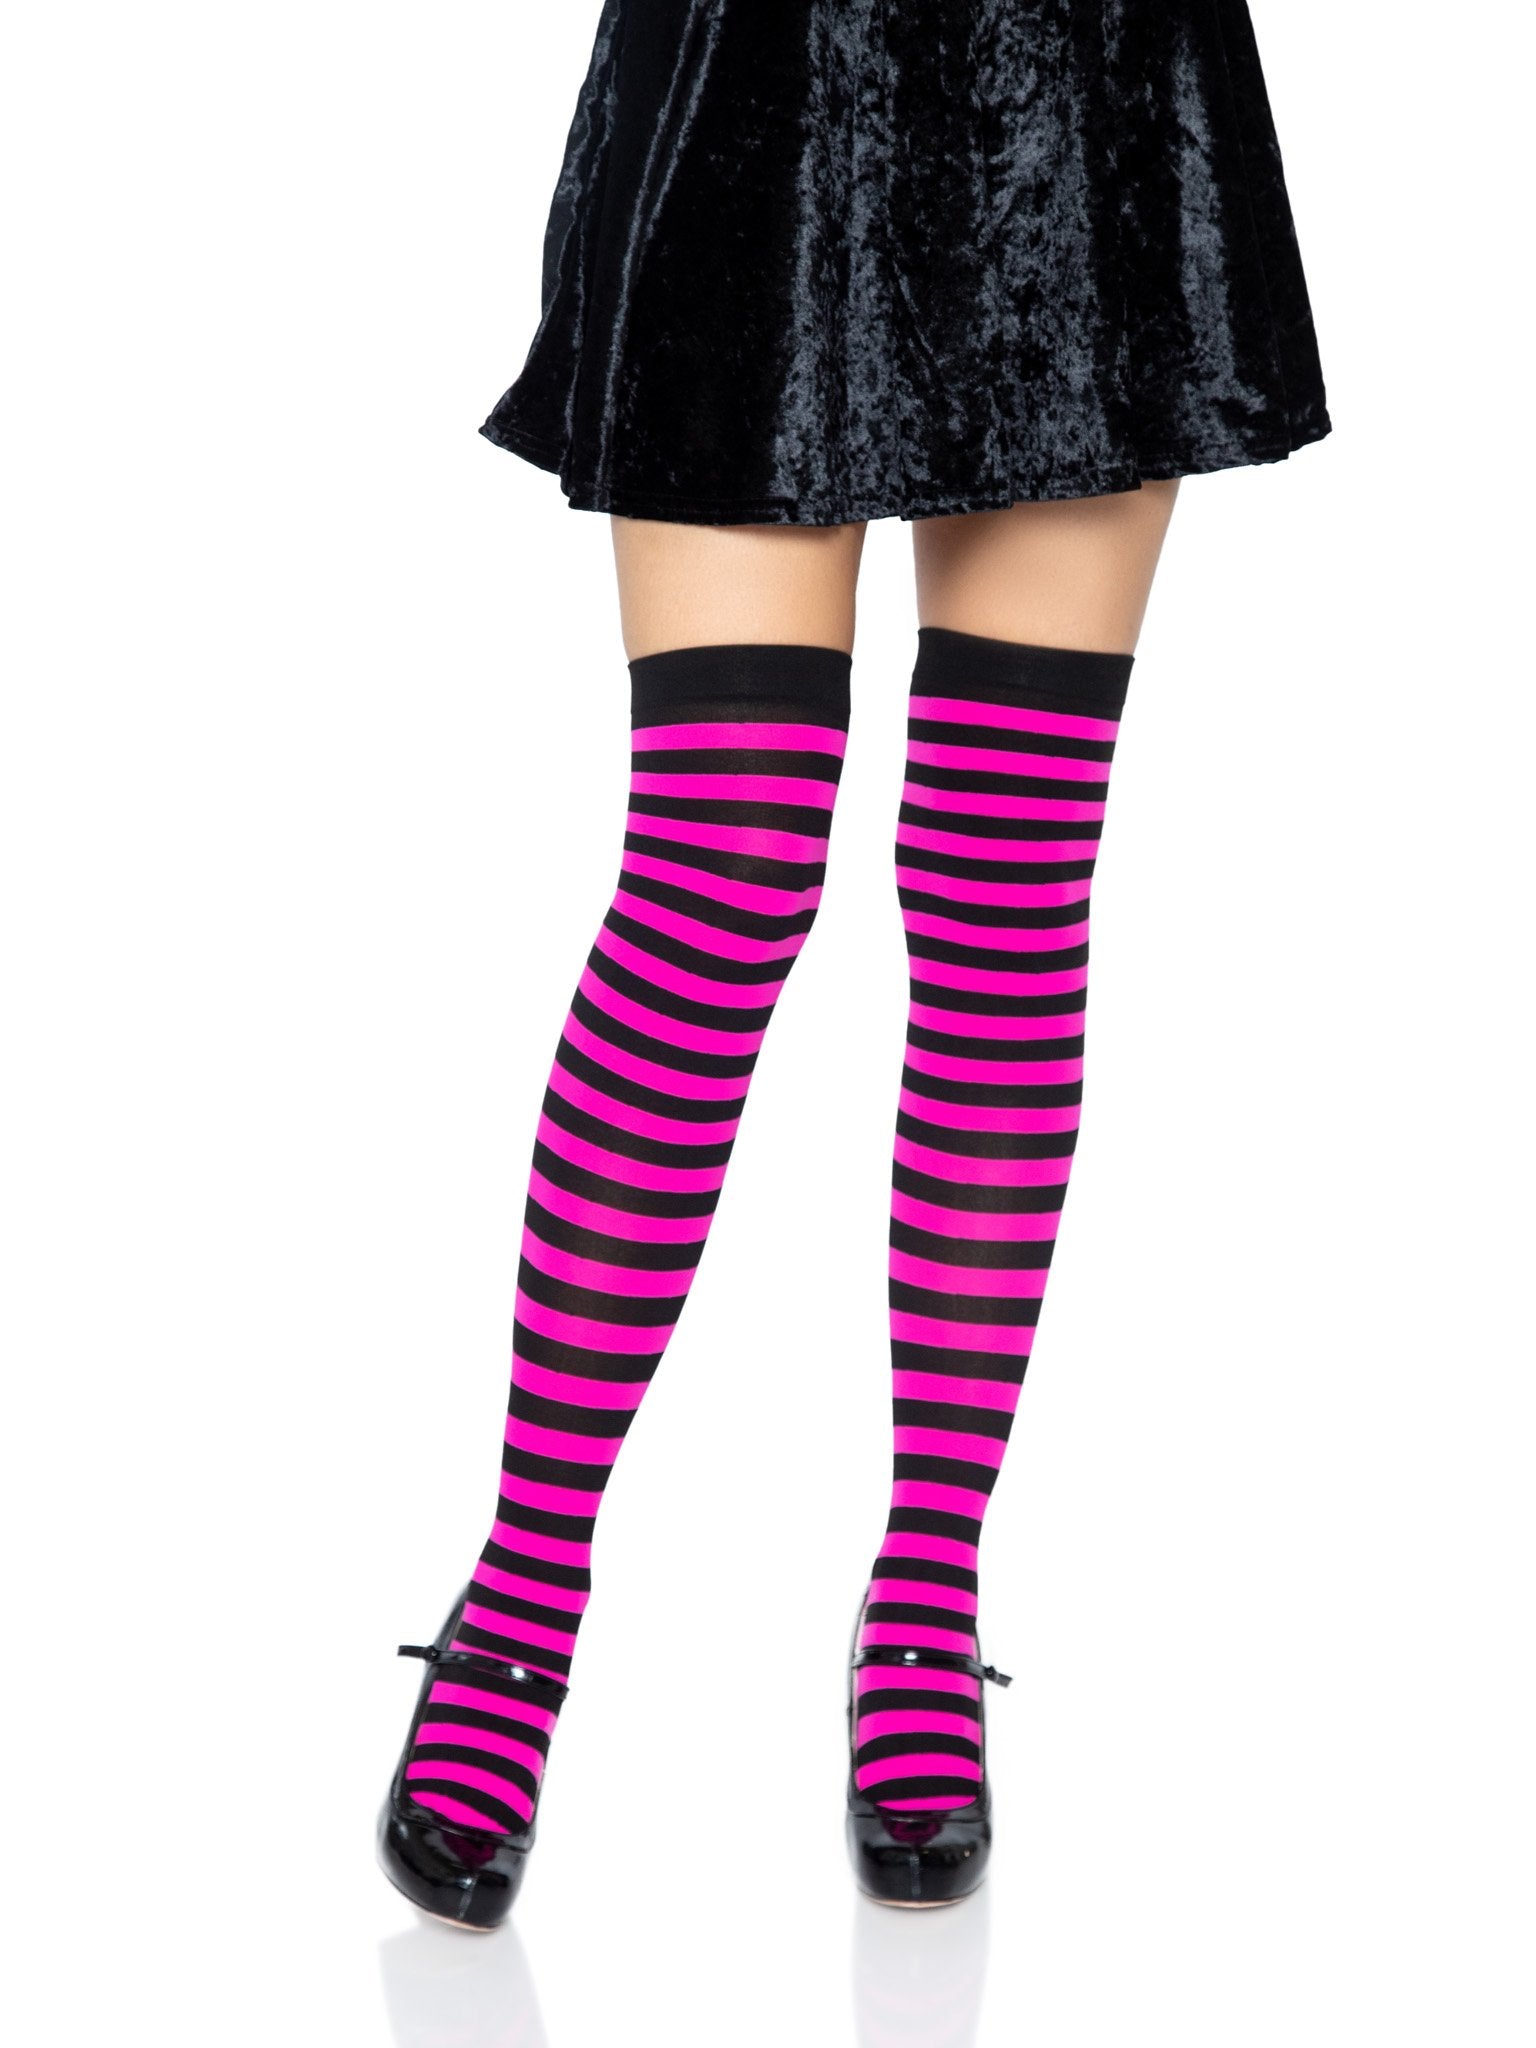 Black & Neon Pink Striped Knee High Stockings Perth